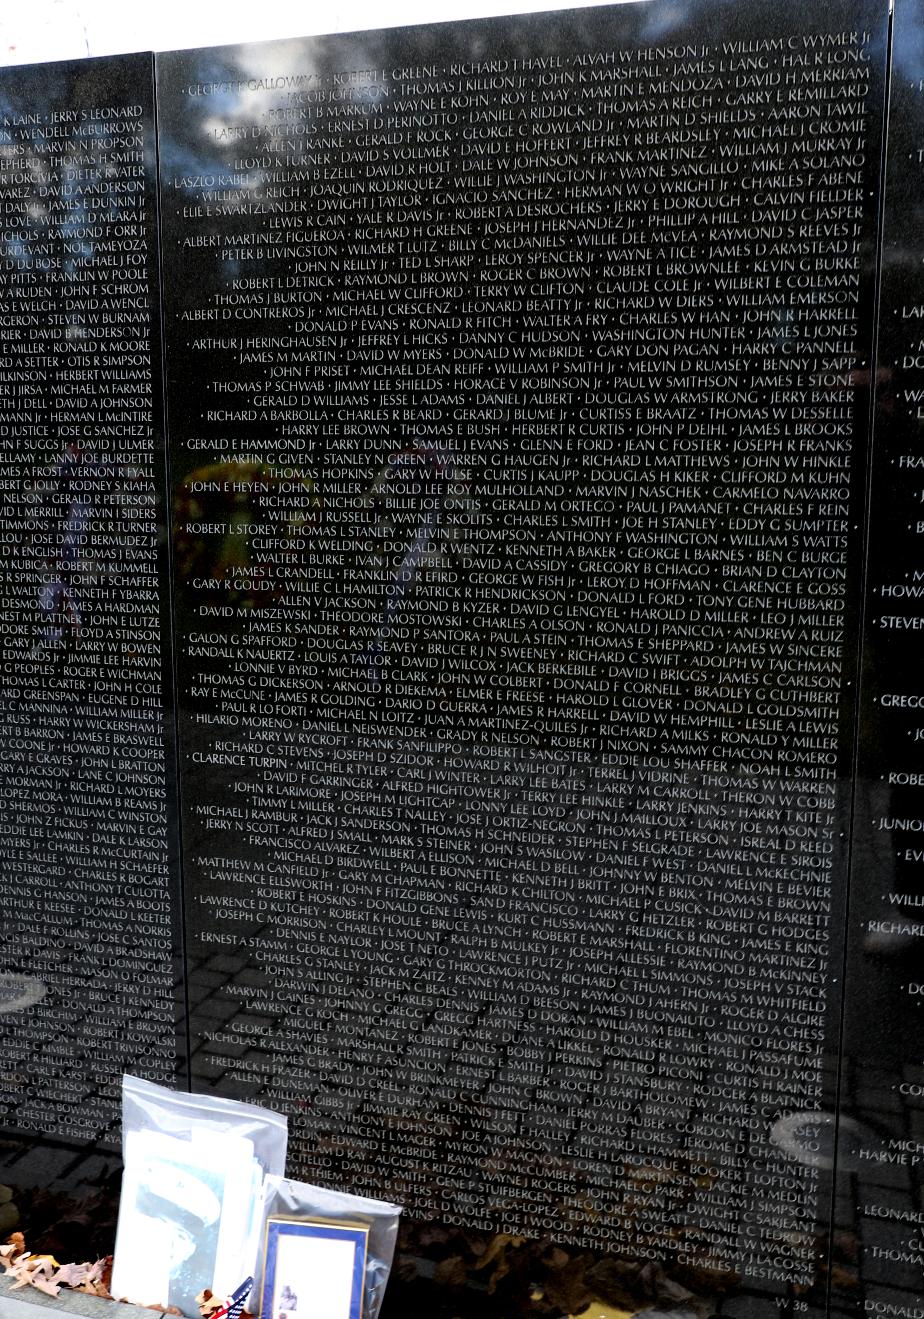 Vietnam Memorial Wall Panel W-38 Darwin James Delano Line 65 Hinsdale NH Vietnam War Casualty